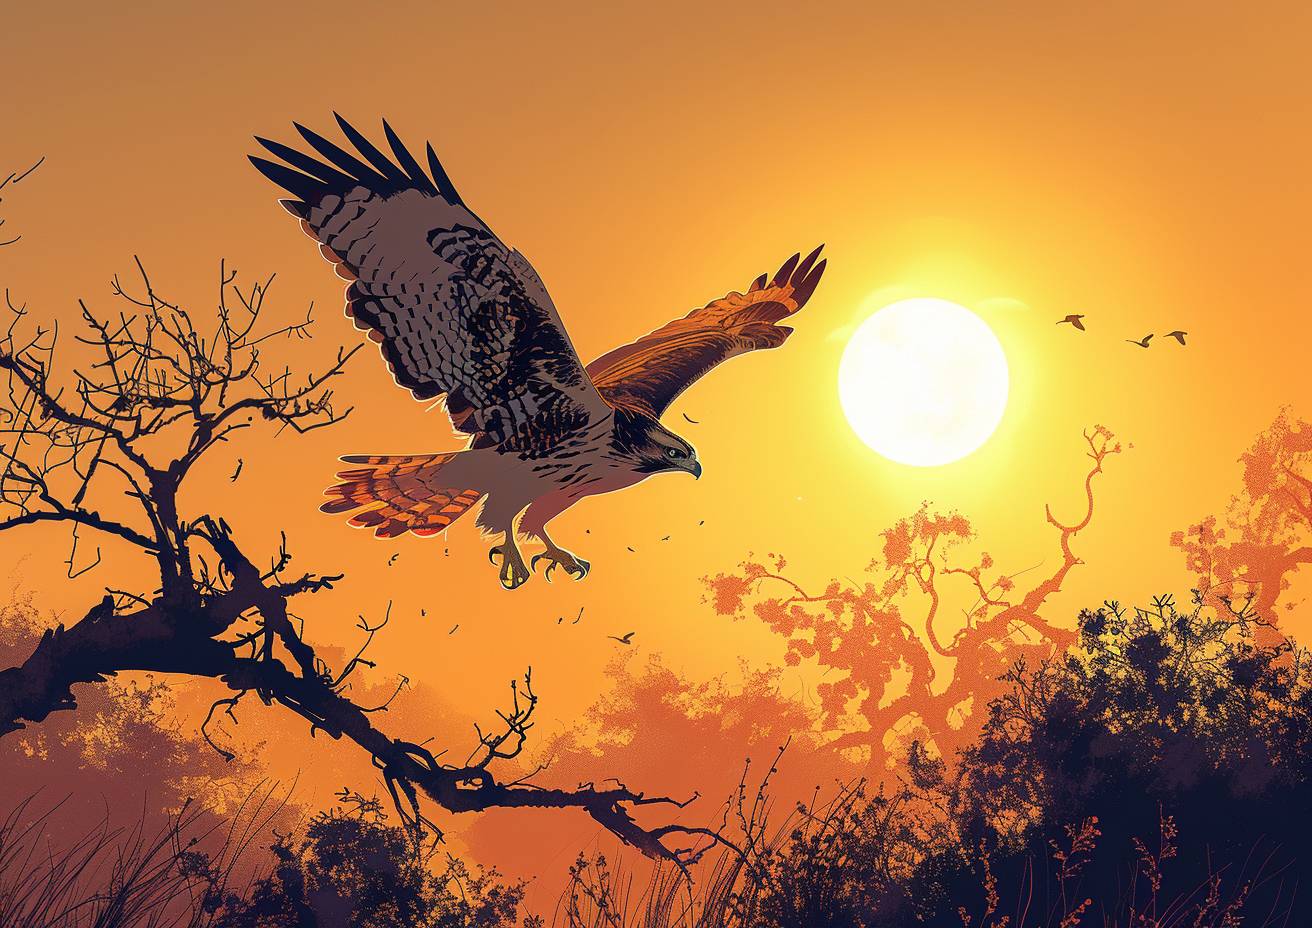 Minimalist landscape, a hawk launches itself from a dead tree, wings strobing in the sunlight